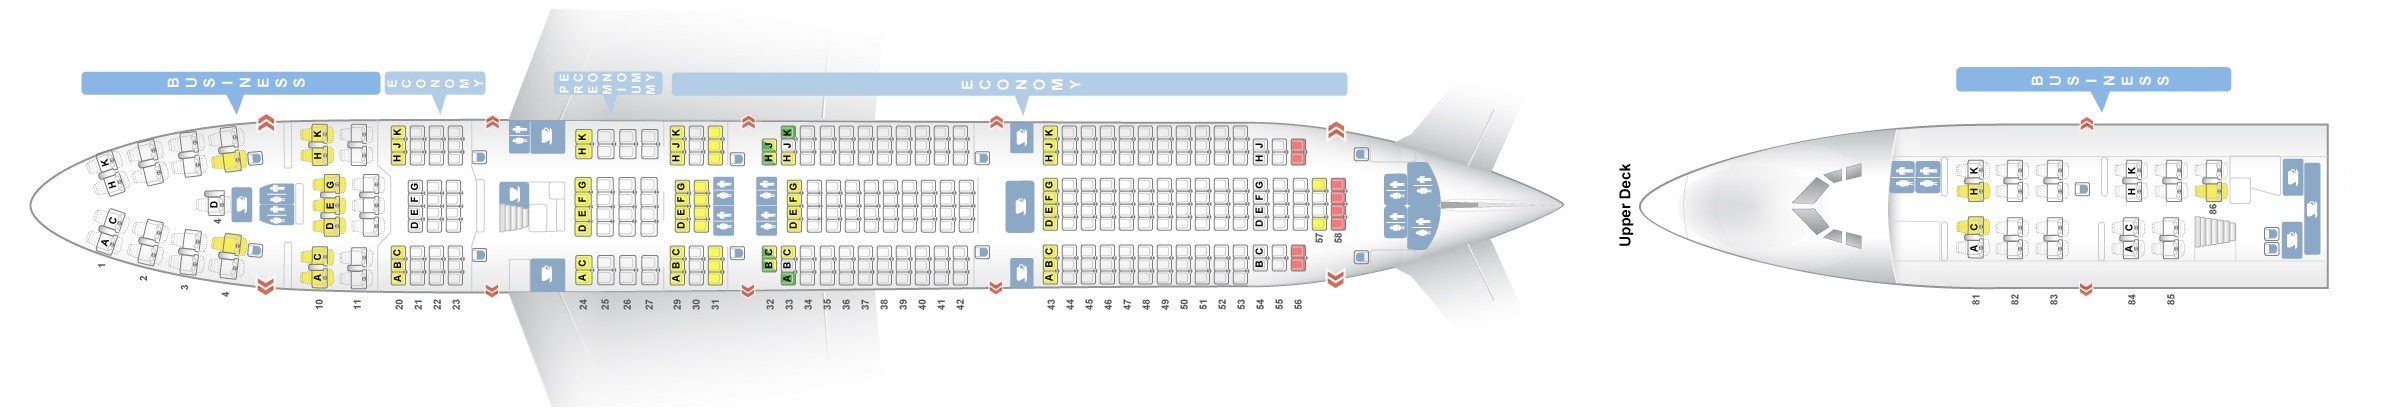 Lufthansa Boeing 744 Seating Chart